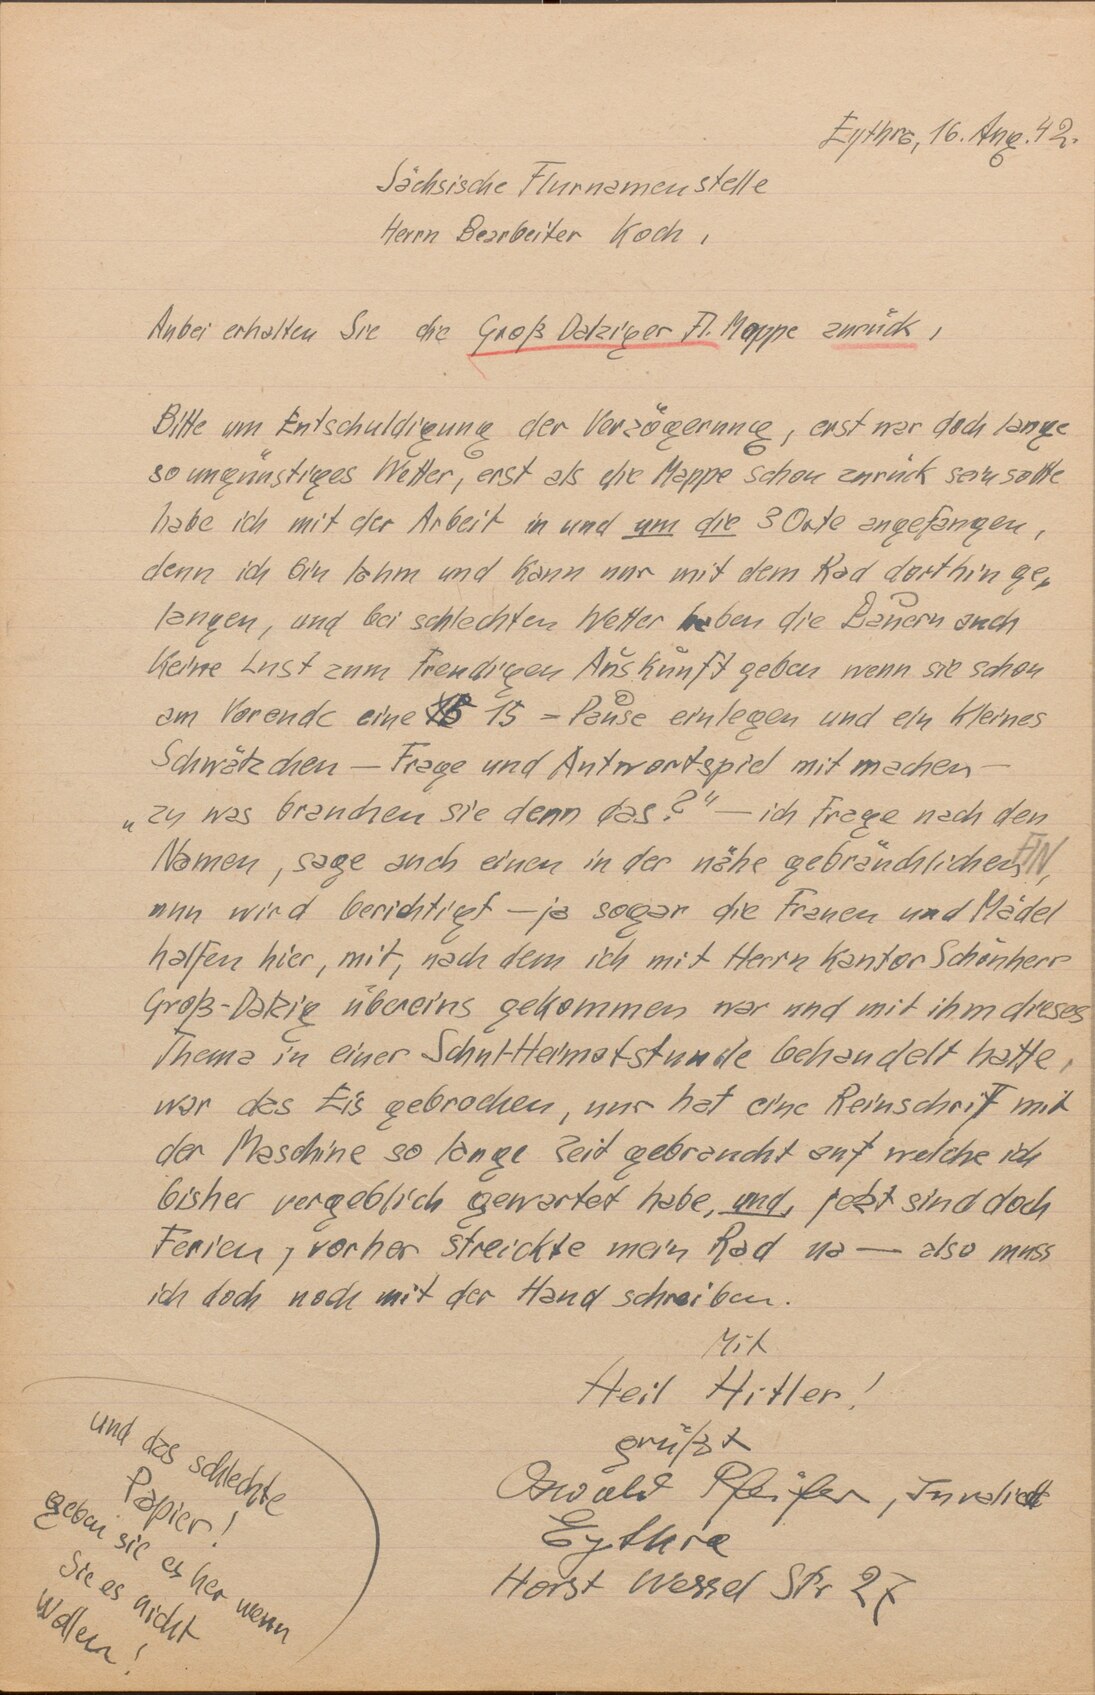 Bericht des Flurnamensammlers Oswald Pfeifer aus Eythra, 1942